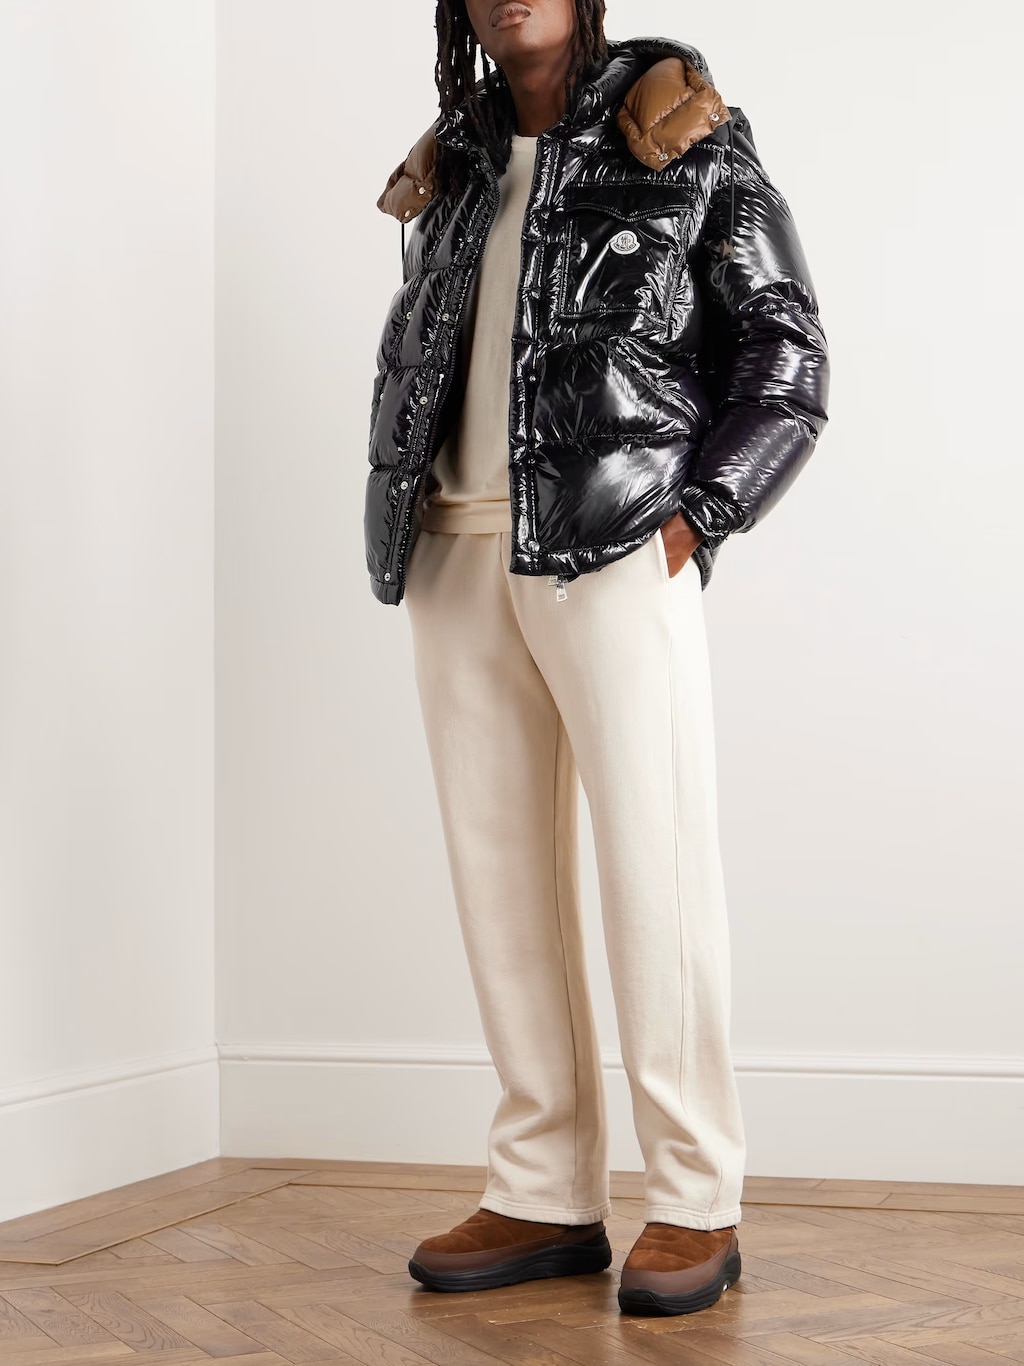 Men's Designer Coats & Jackets | Men's Clothing | MR PORTER